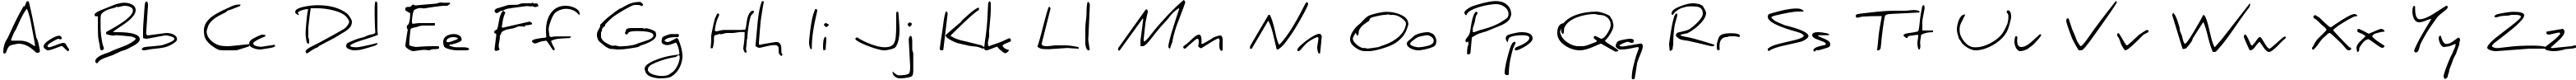 Пример написания английского алфавита шрифтом Daniel